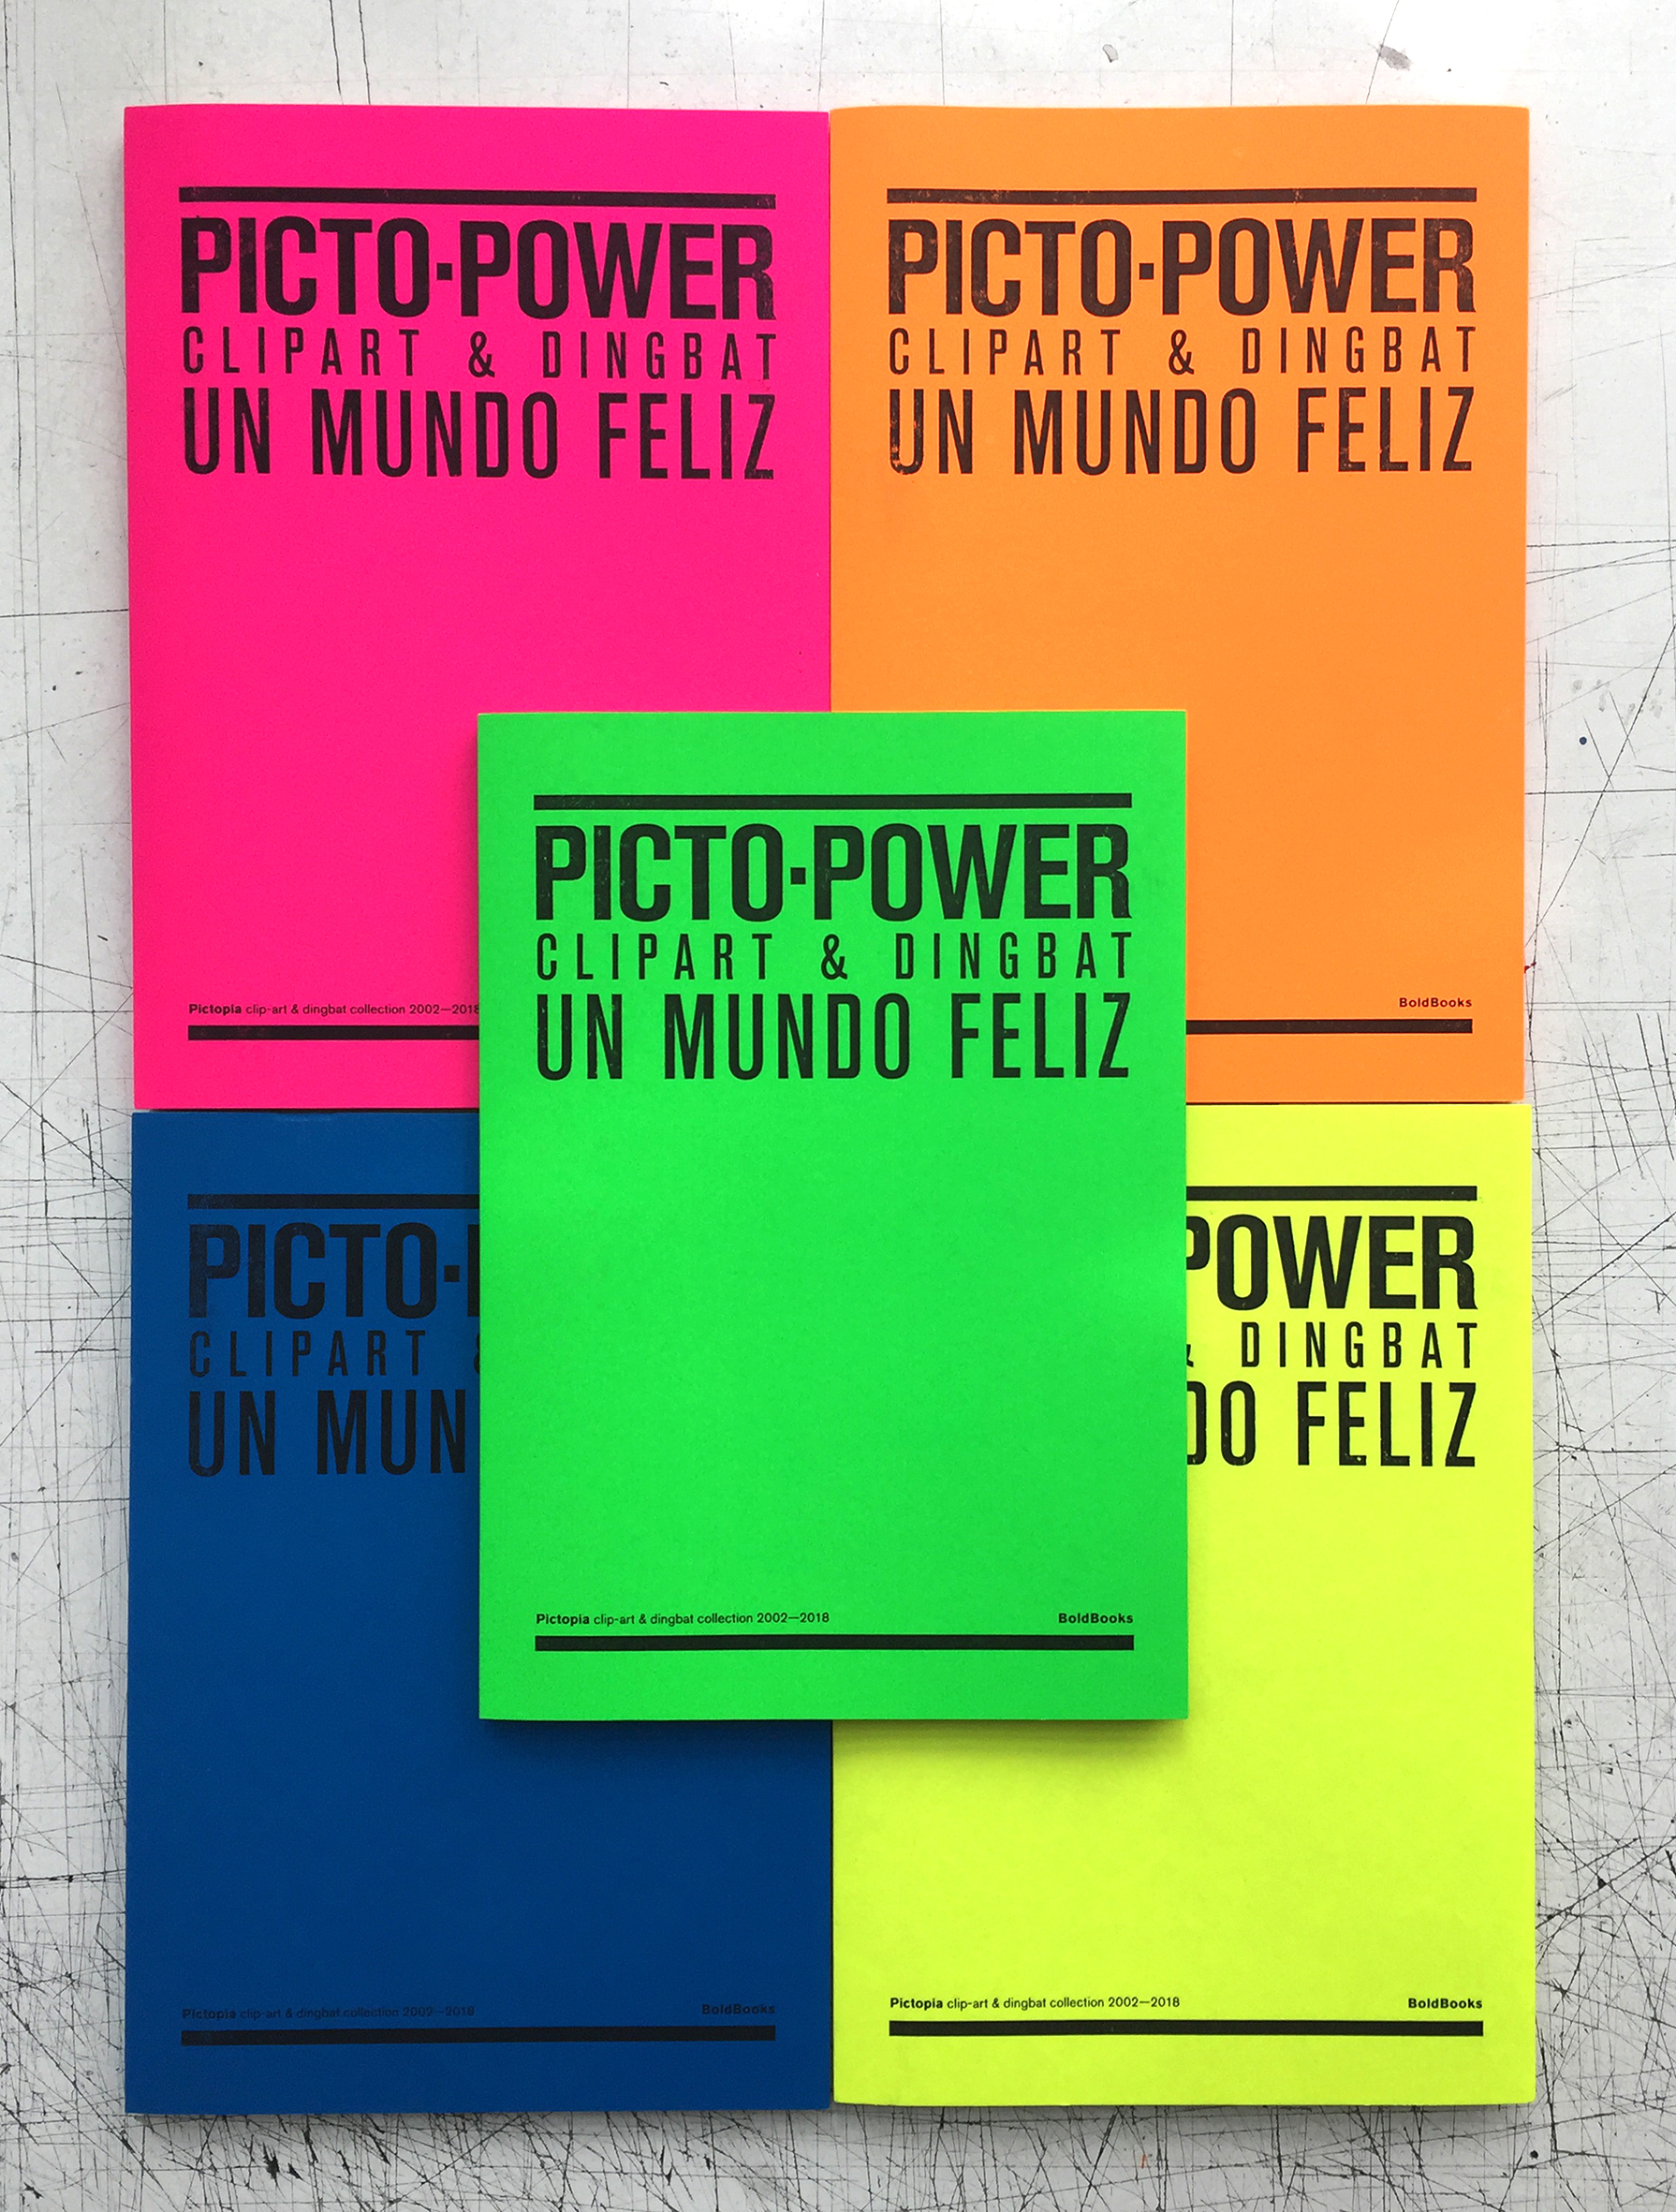 Picto-Power / Pictopia clip-art & dingbat collection 2002—2018 by Un Mundo Feliz / Sonia Díaz y Gabriel Martínez - Creative Work